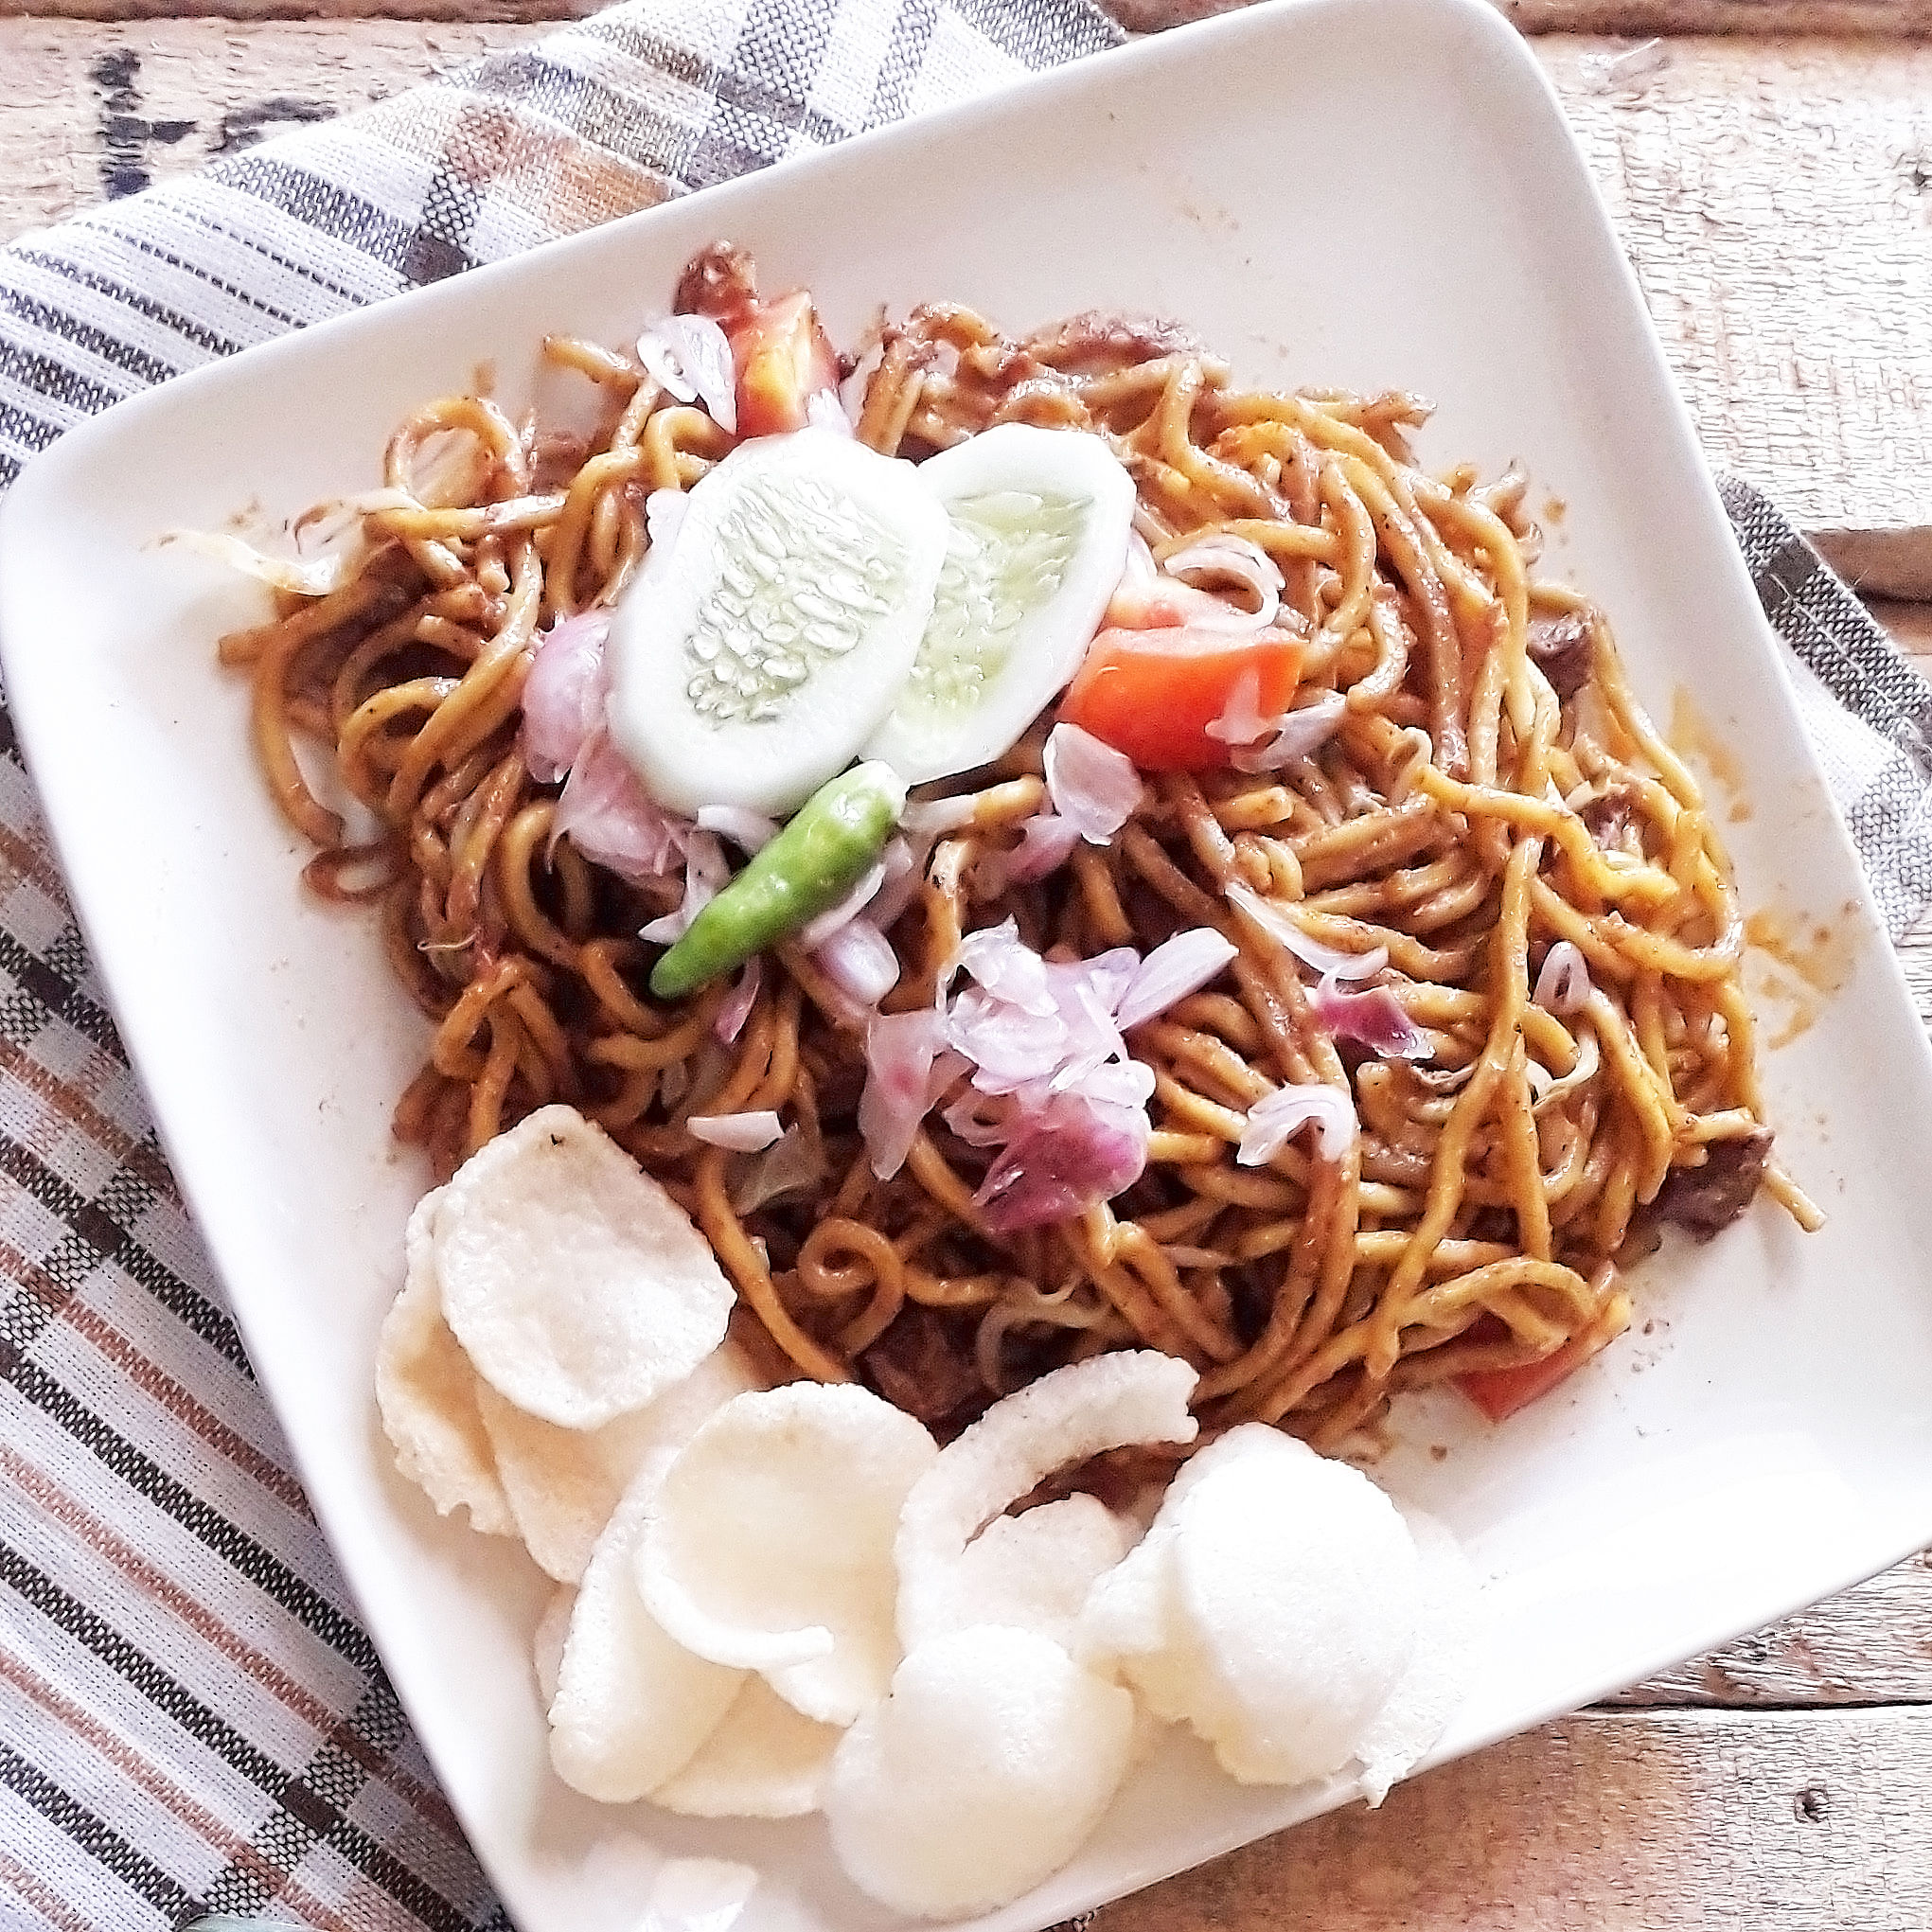 Kuliner Khas Aceh di Depok yang Recommended